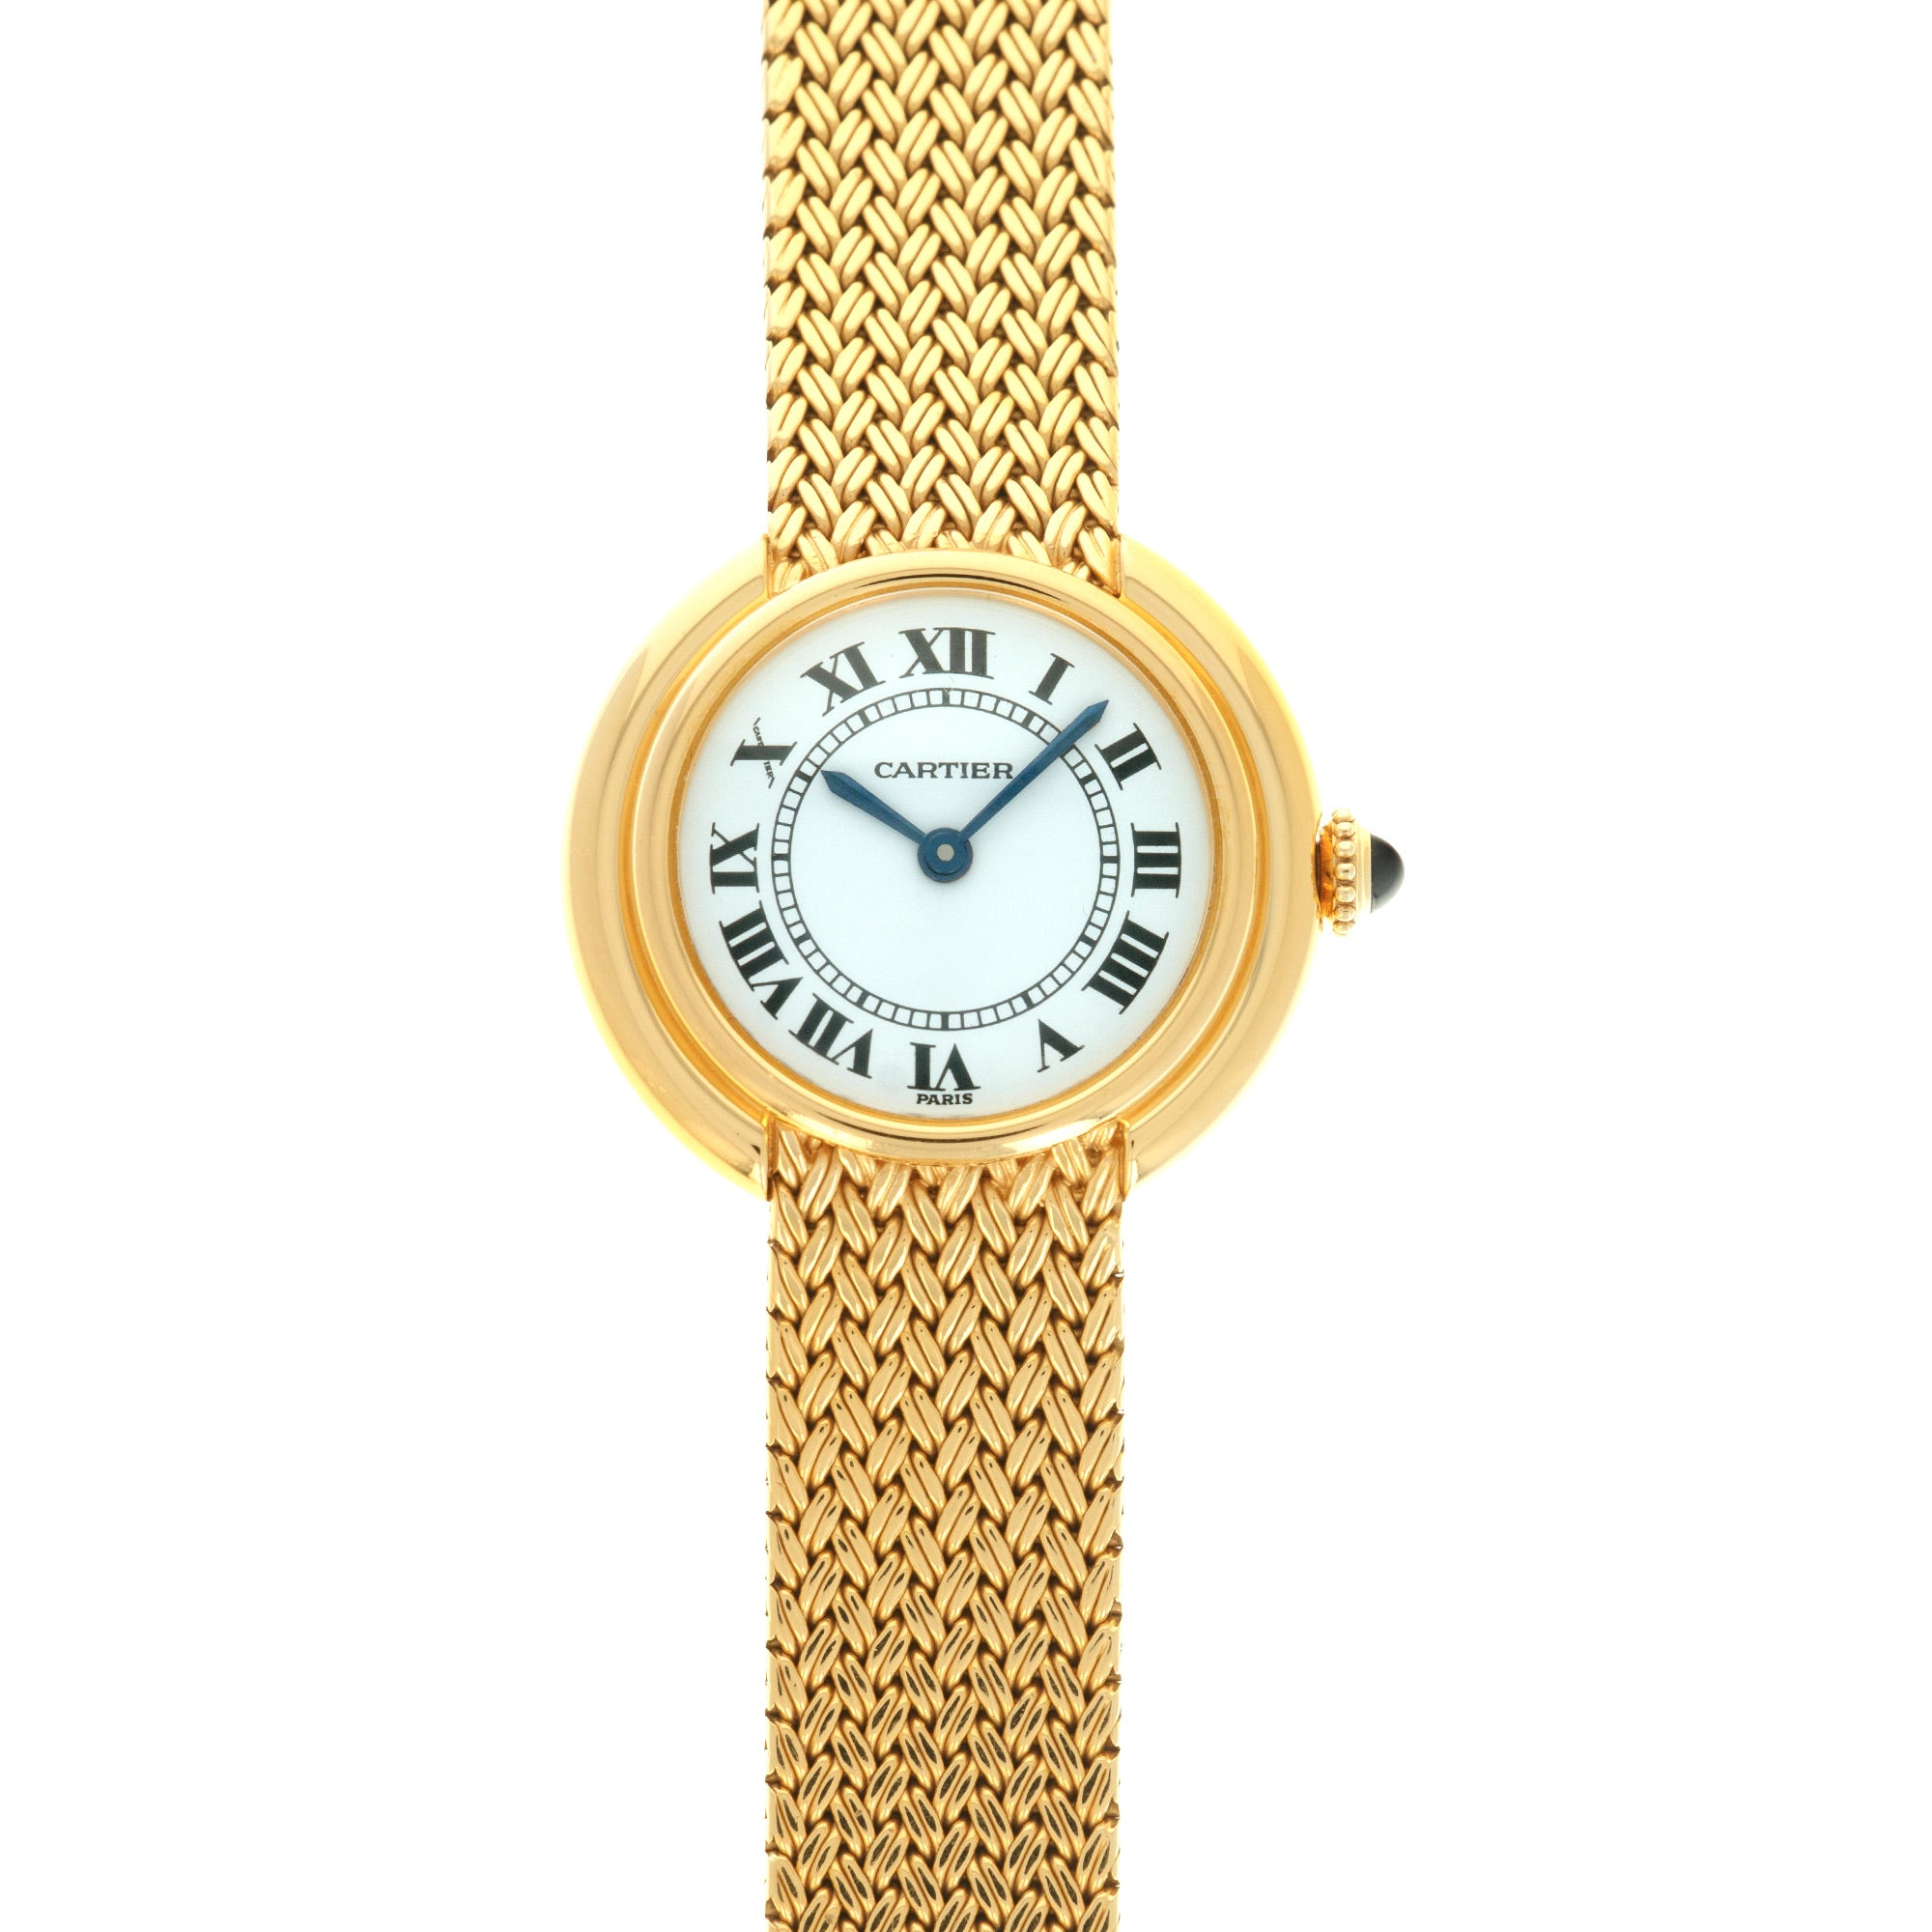 Cartier - Cartier Yellow Gold Gondole Bracelet Watch - The Keystone Watches